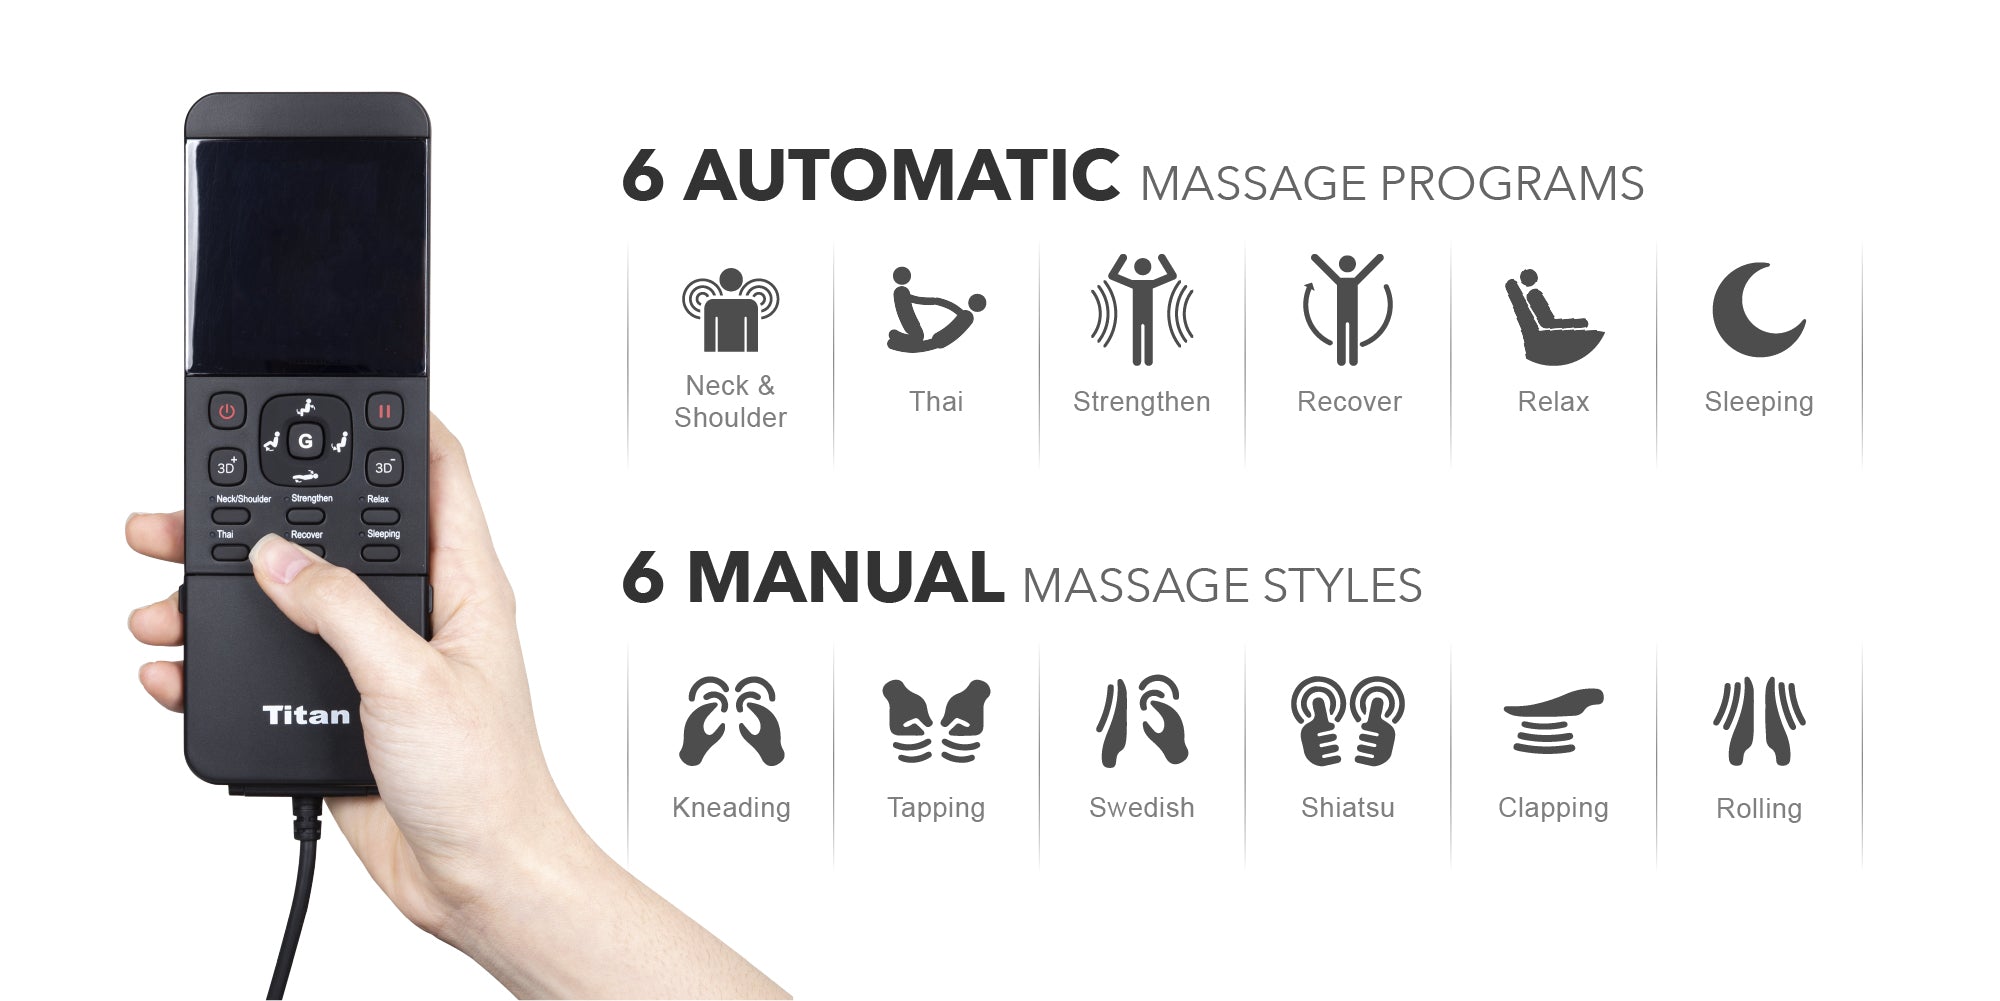 Auto massage programs